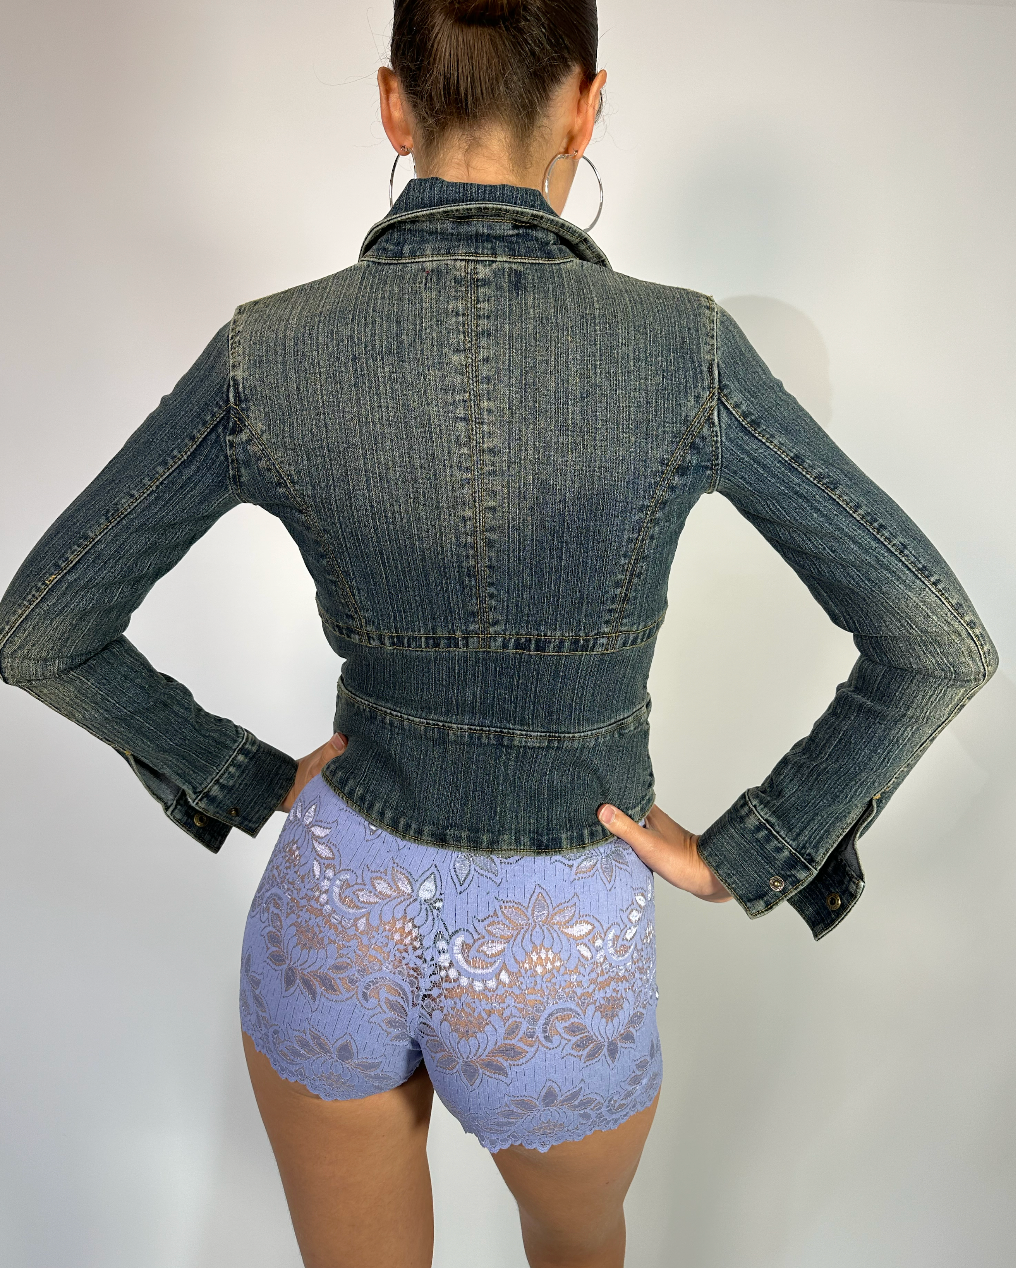 Lilac Lace Shorts